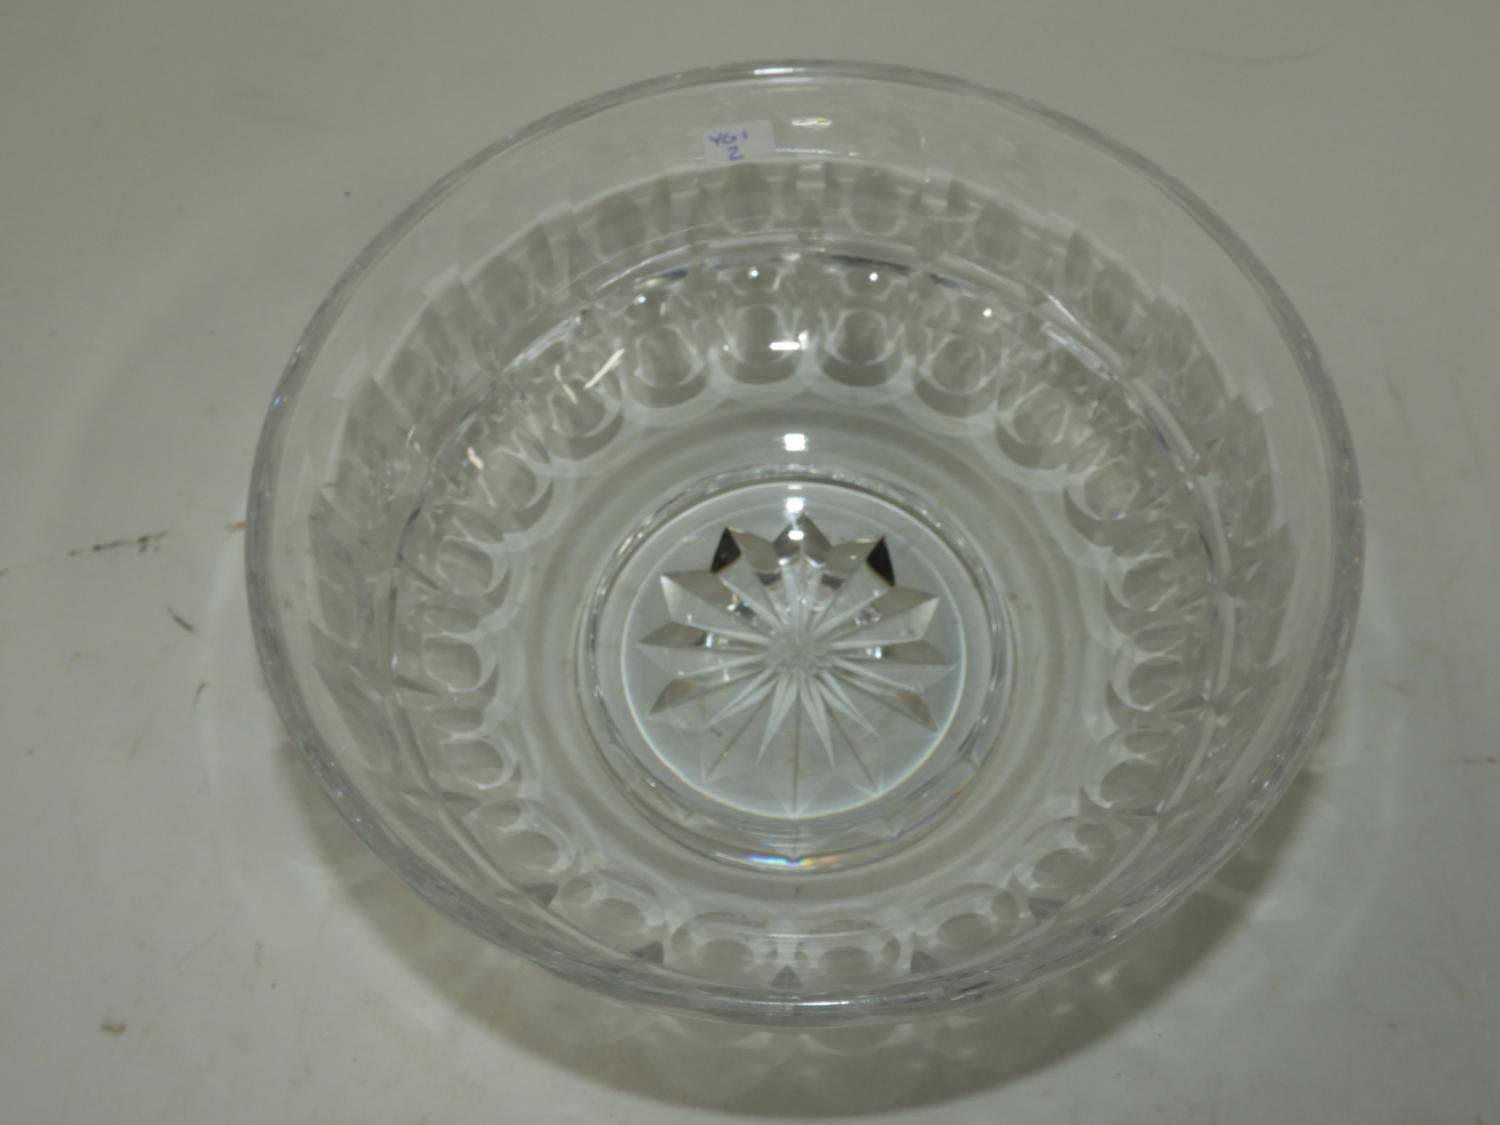 Murrays Auctioneers - Lot 200: Stuart cut crystal bowl, dia 8